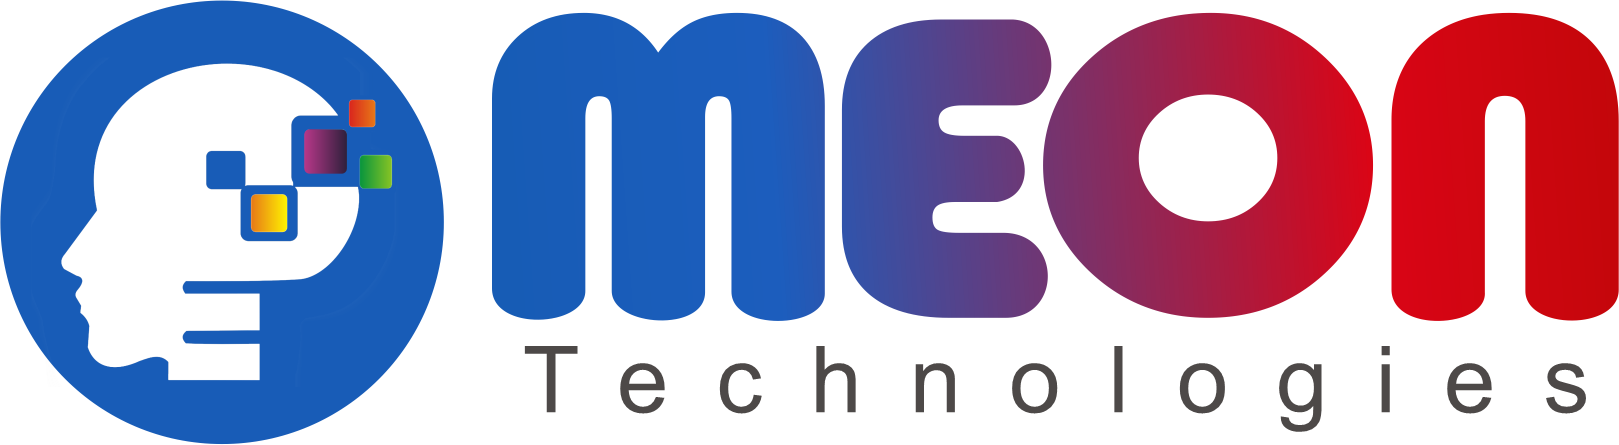 meon logo